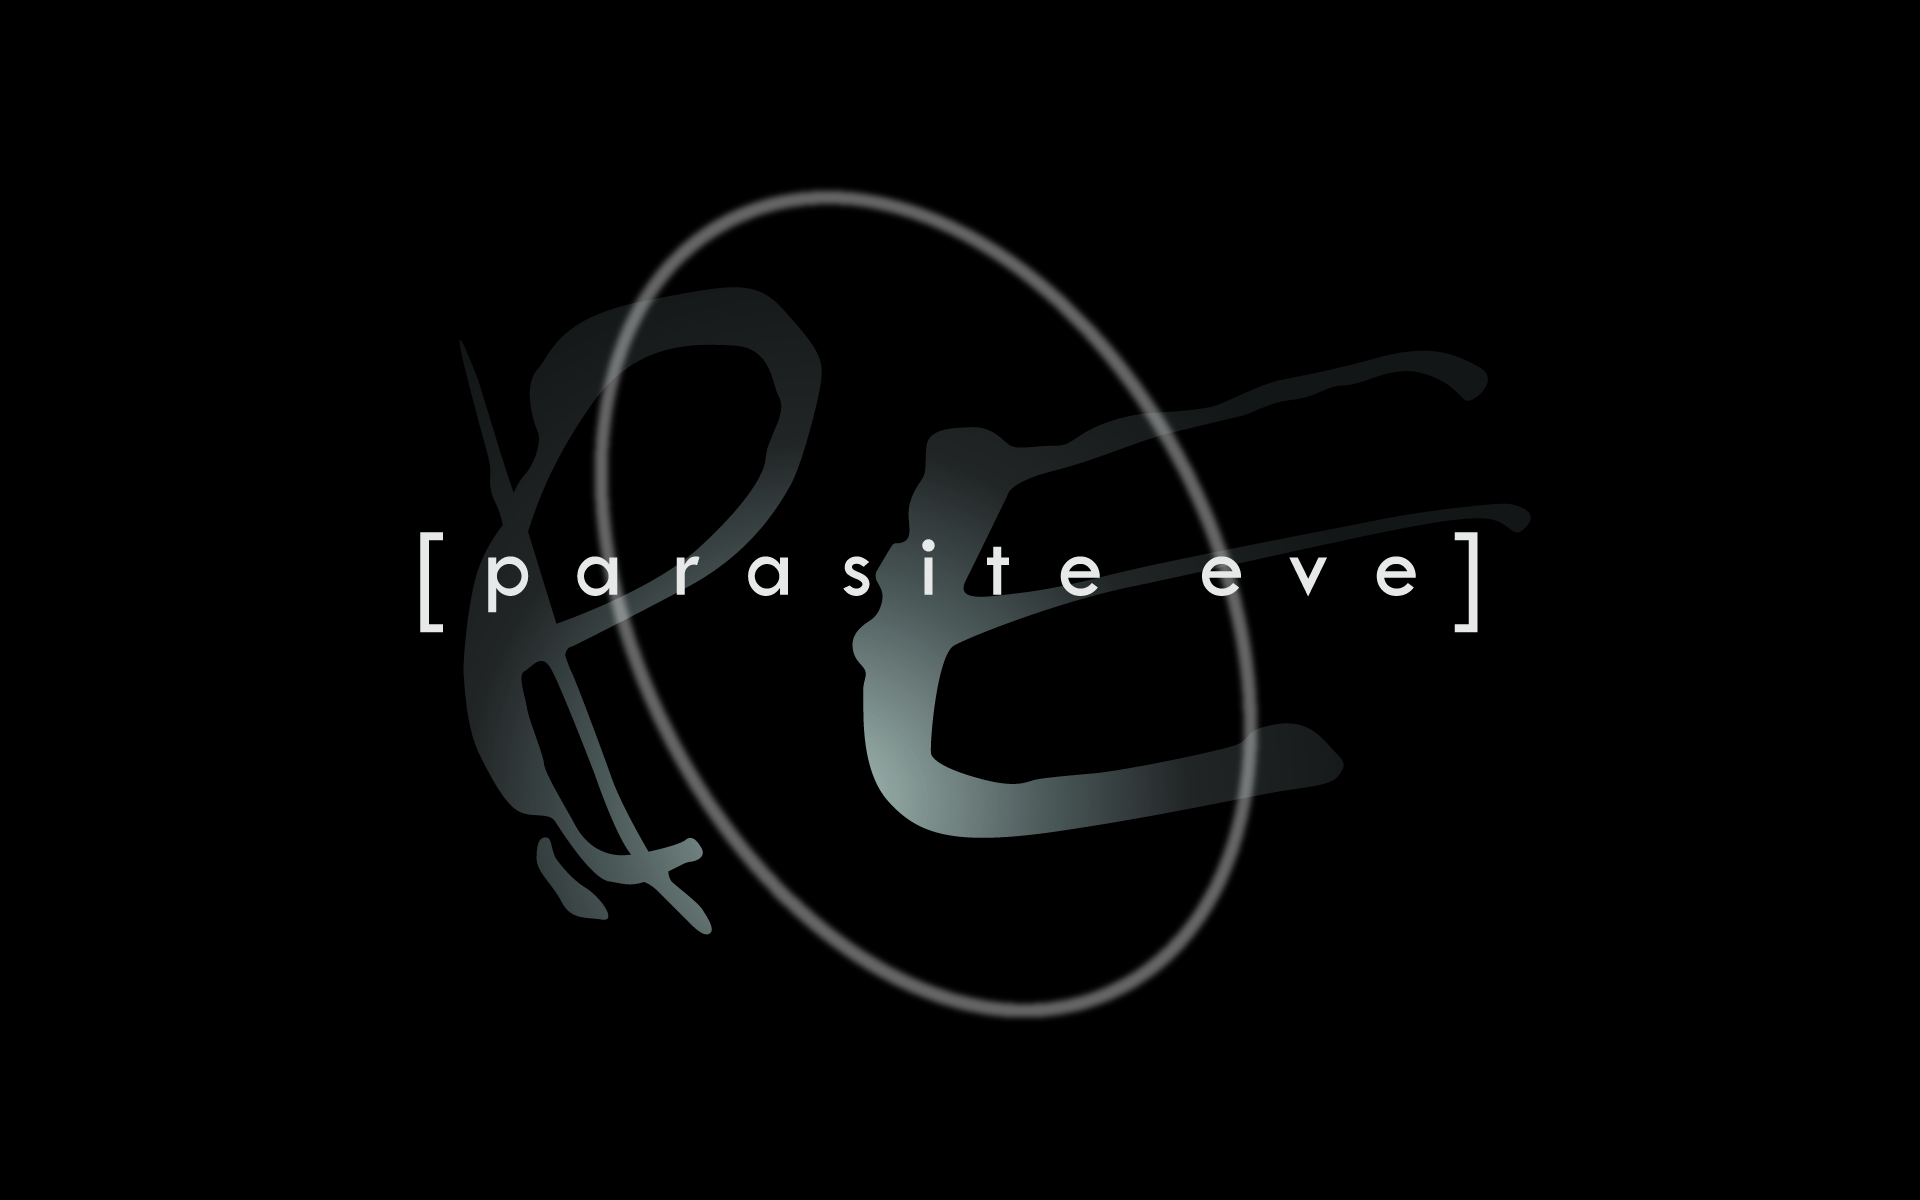 Parasite Eve Wallpaper. Parasite Eve Background